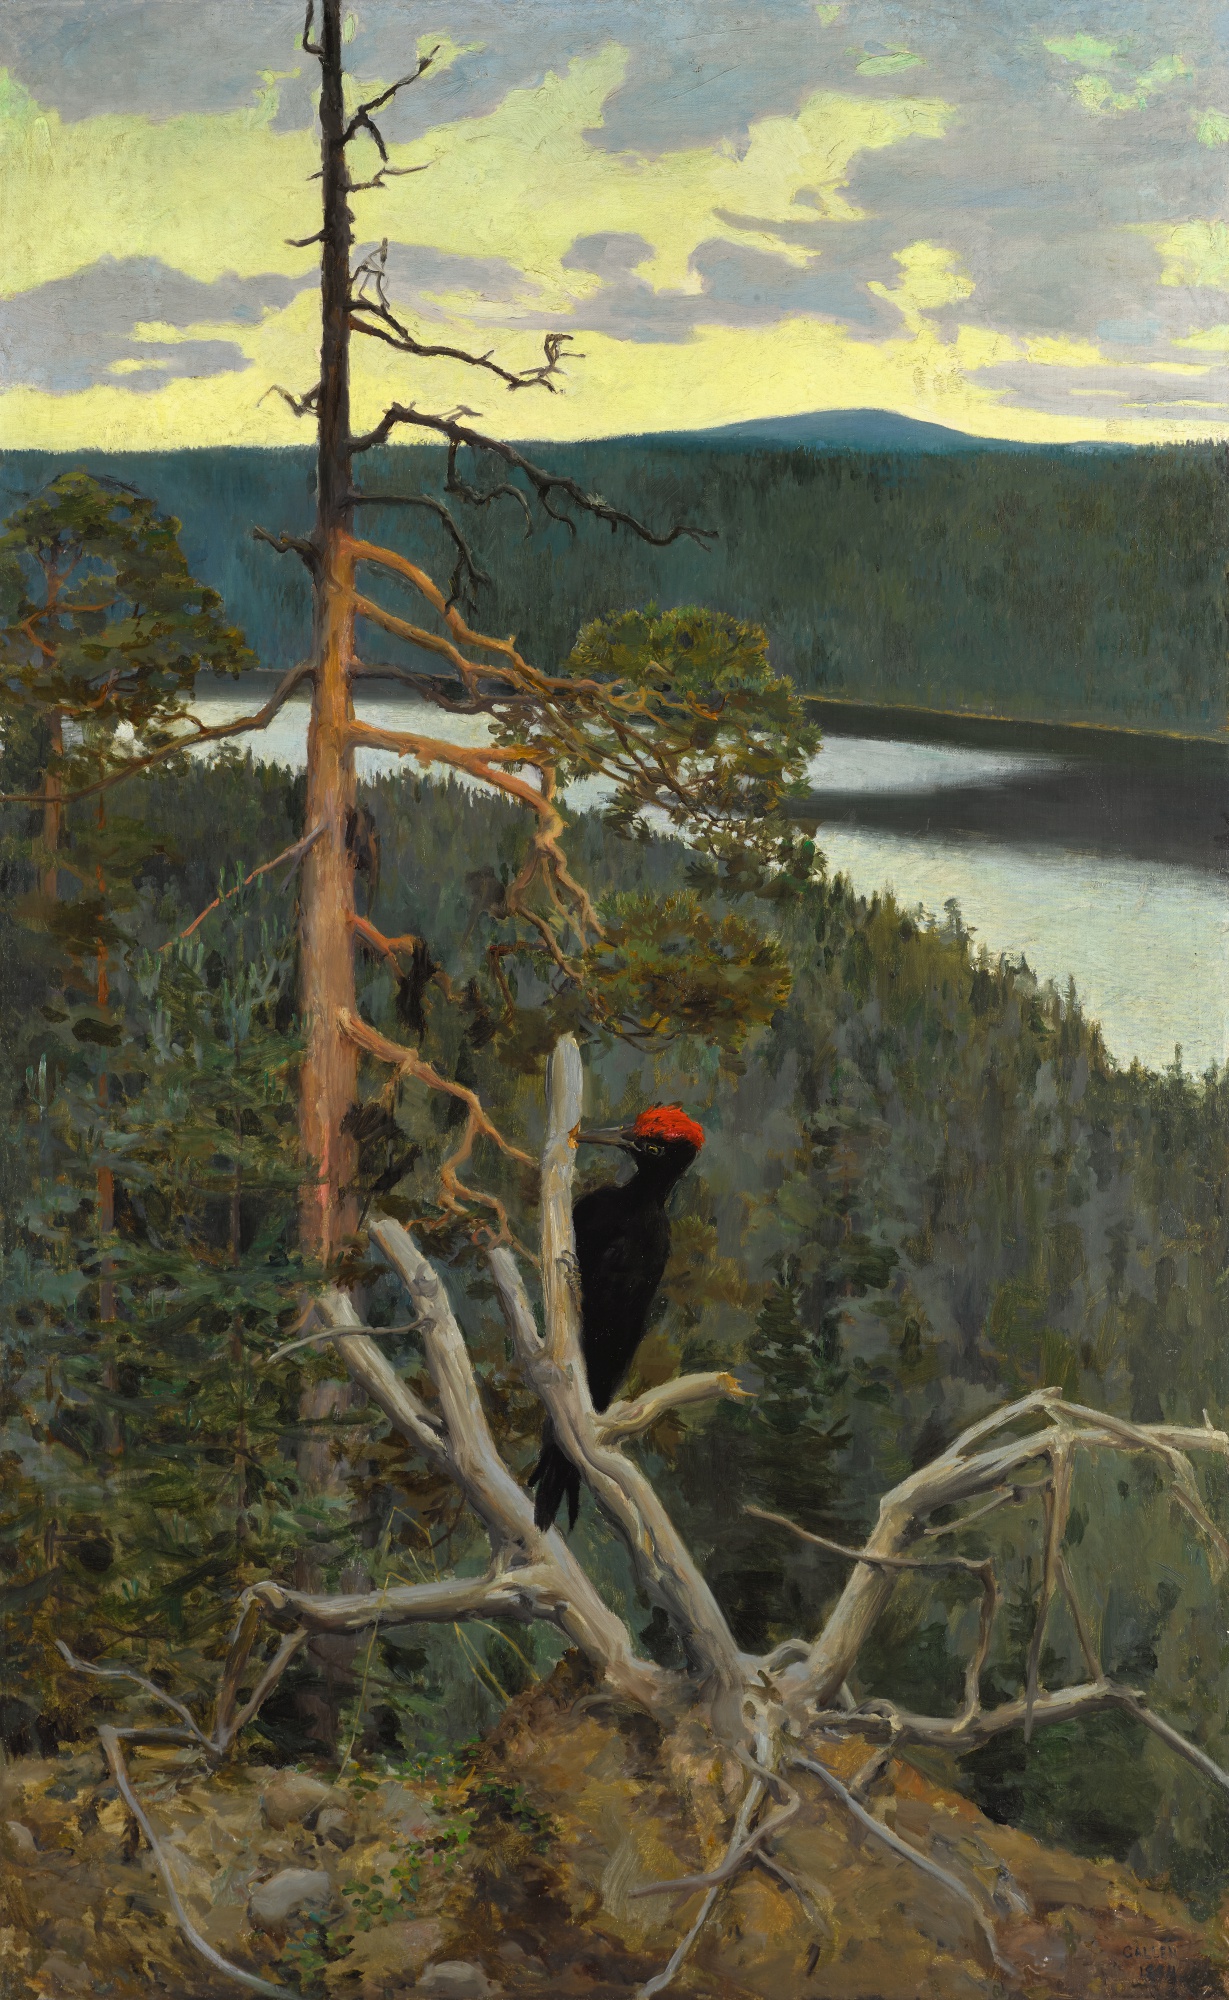 黑色啄木鳥 by Akseli Gallen-Kallela - 1894 - 145 x 91 cm 